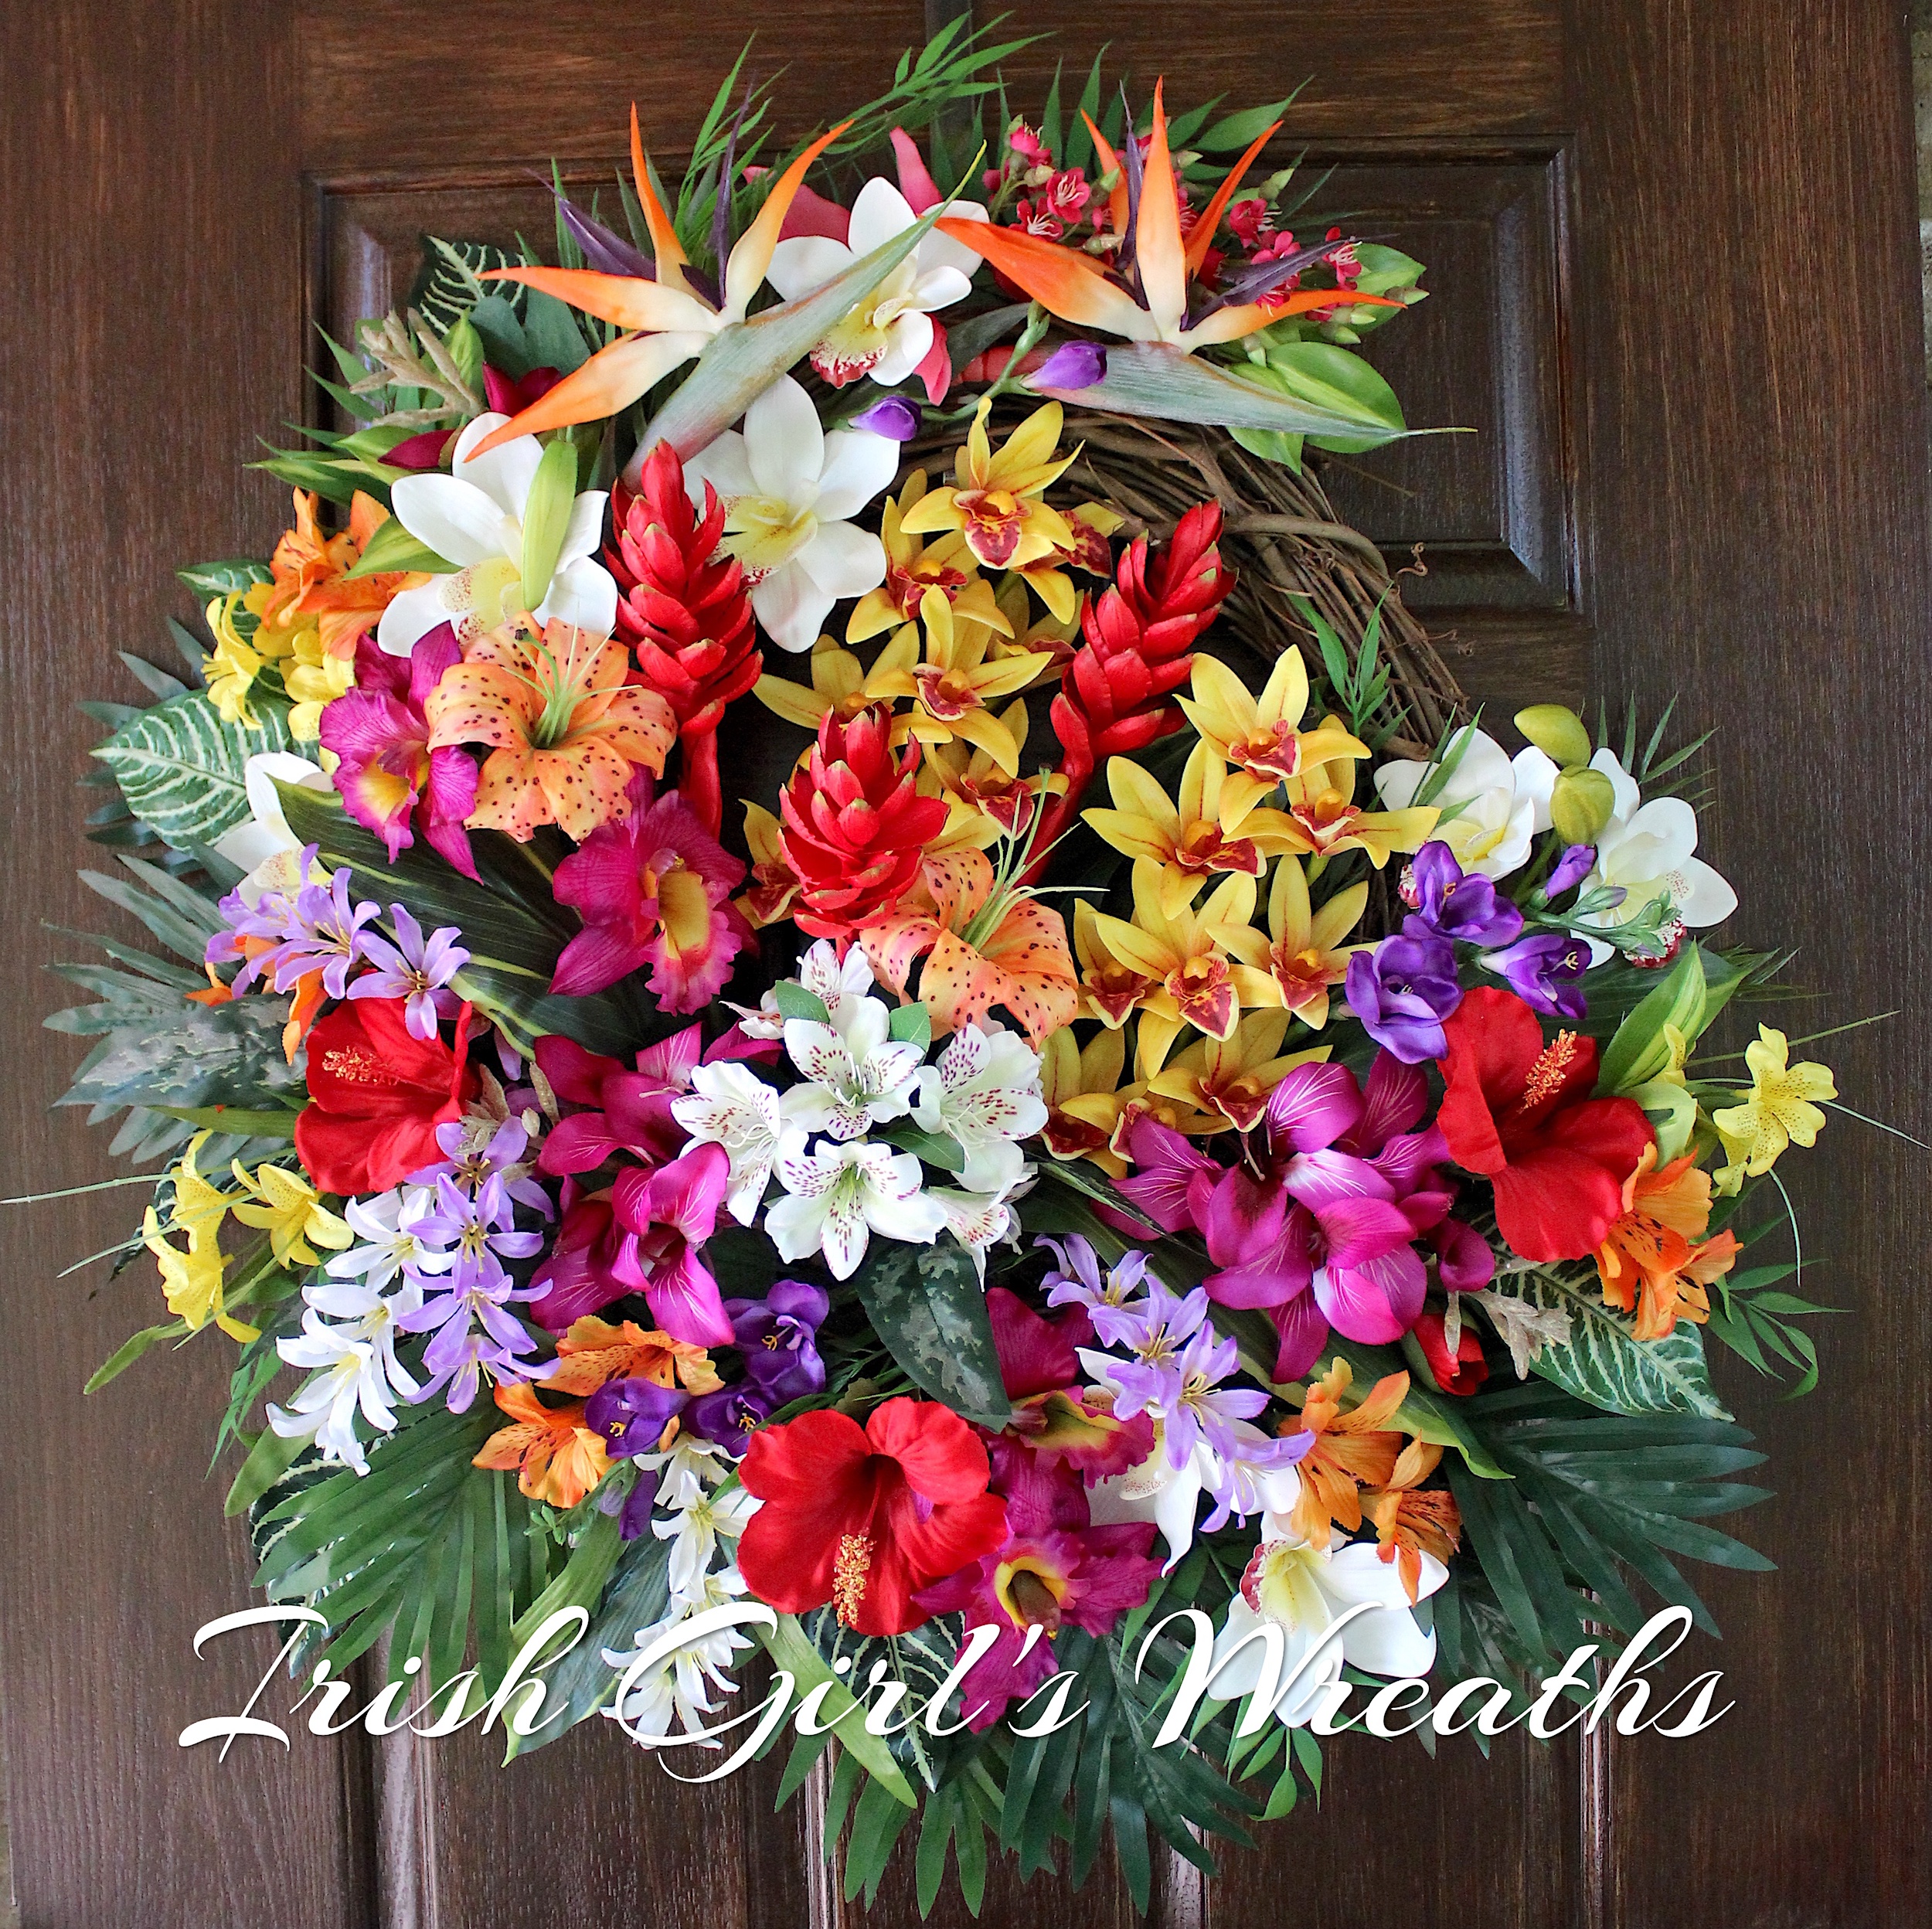 Tropical Island Luau Garden Wreath – Large Summer Hawaiian Ginger and Orchid Floral Wreath